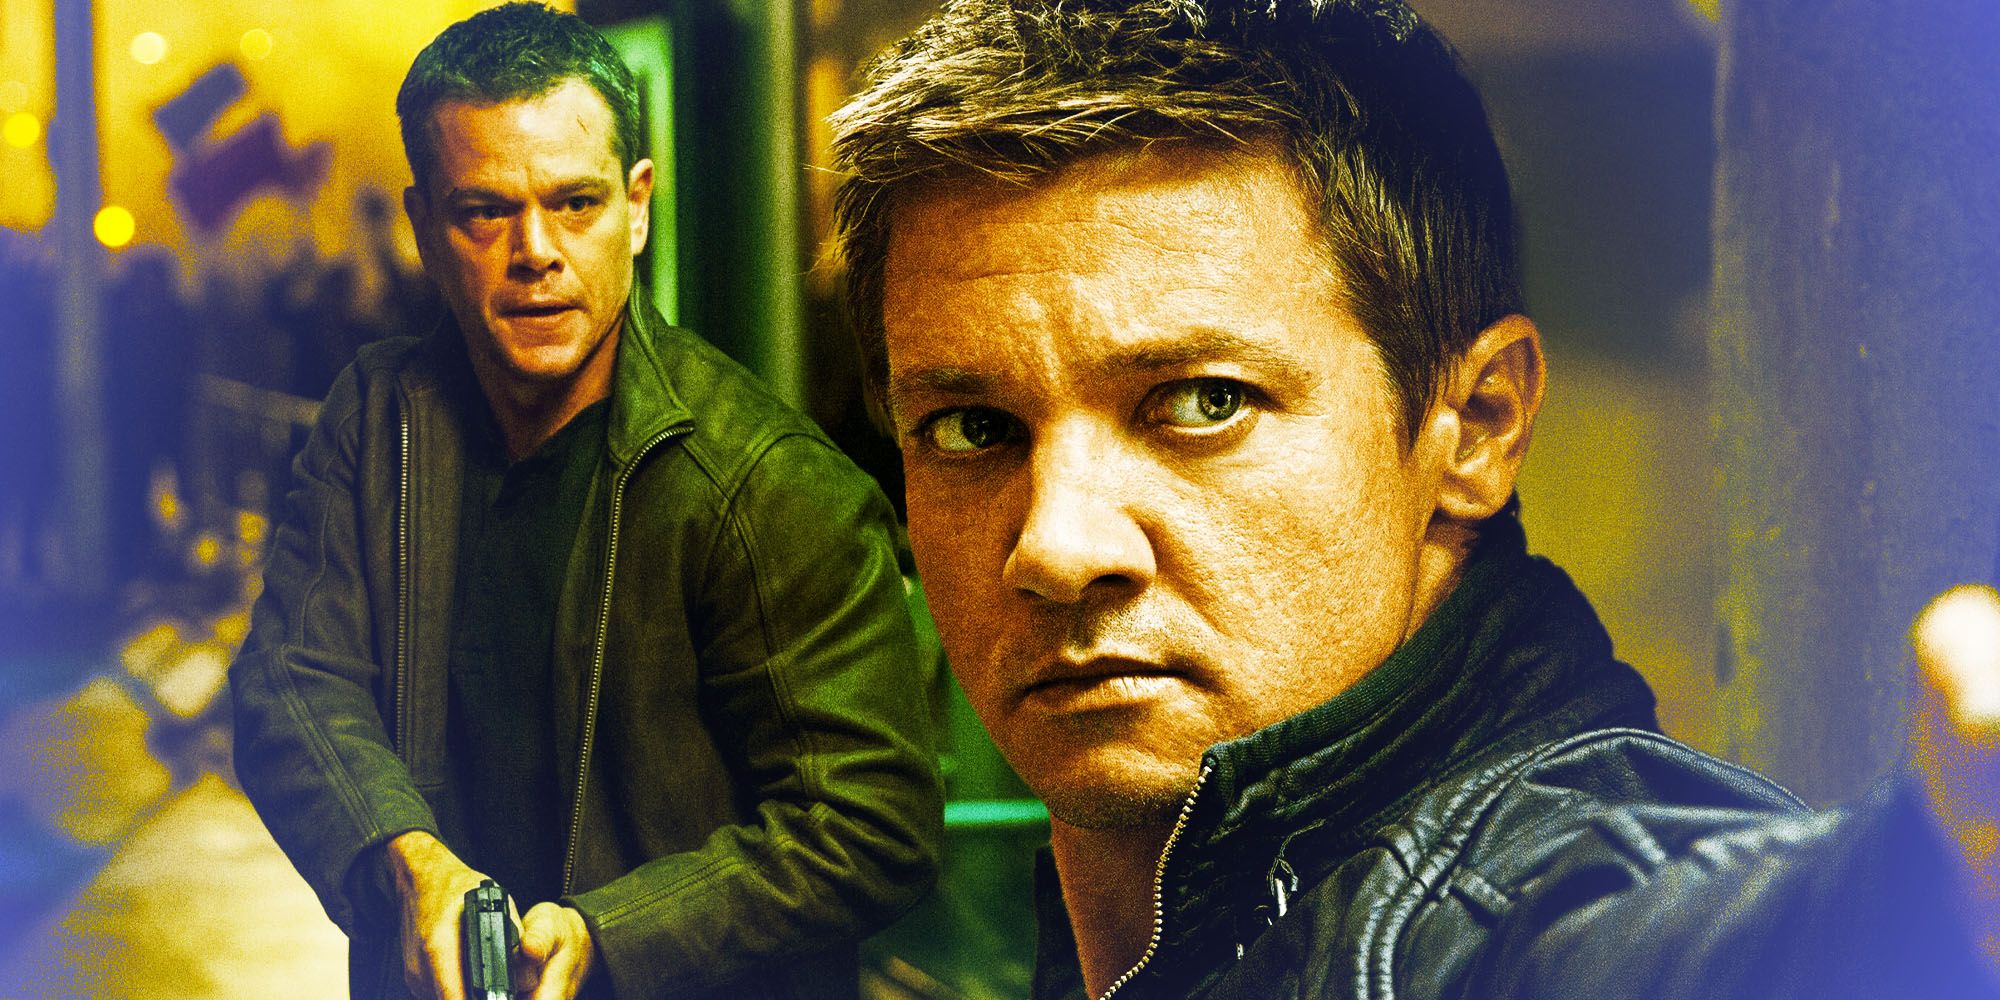 Matt Damon as Jason Bourne and Jeremy Renner as Aaron Cross